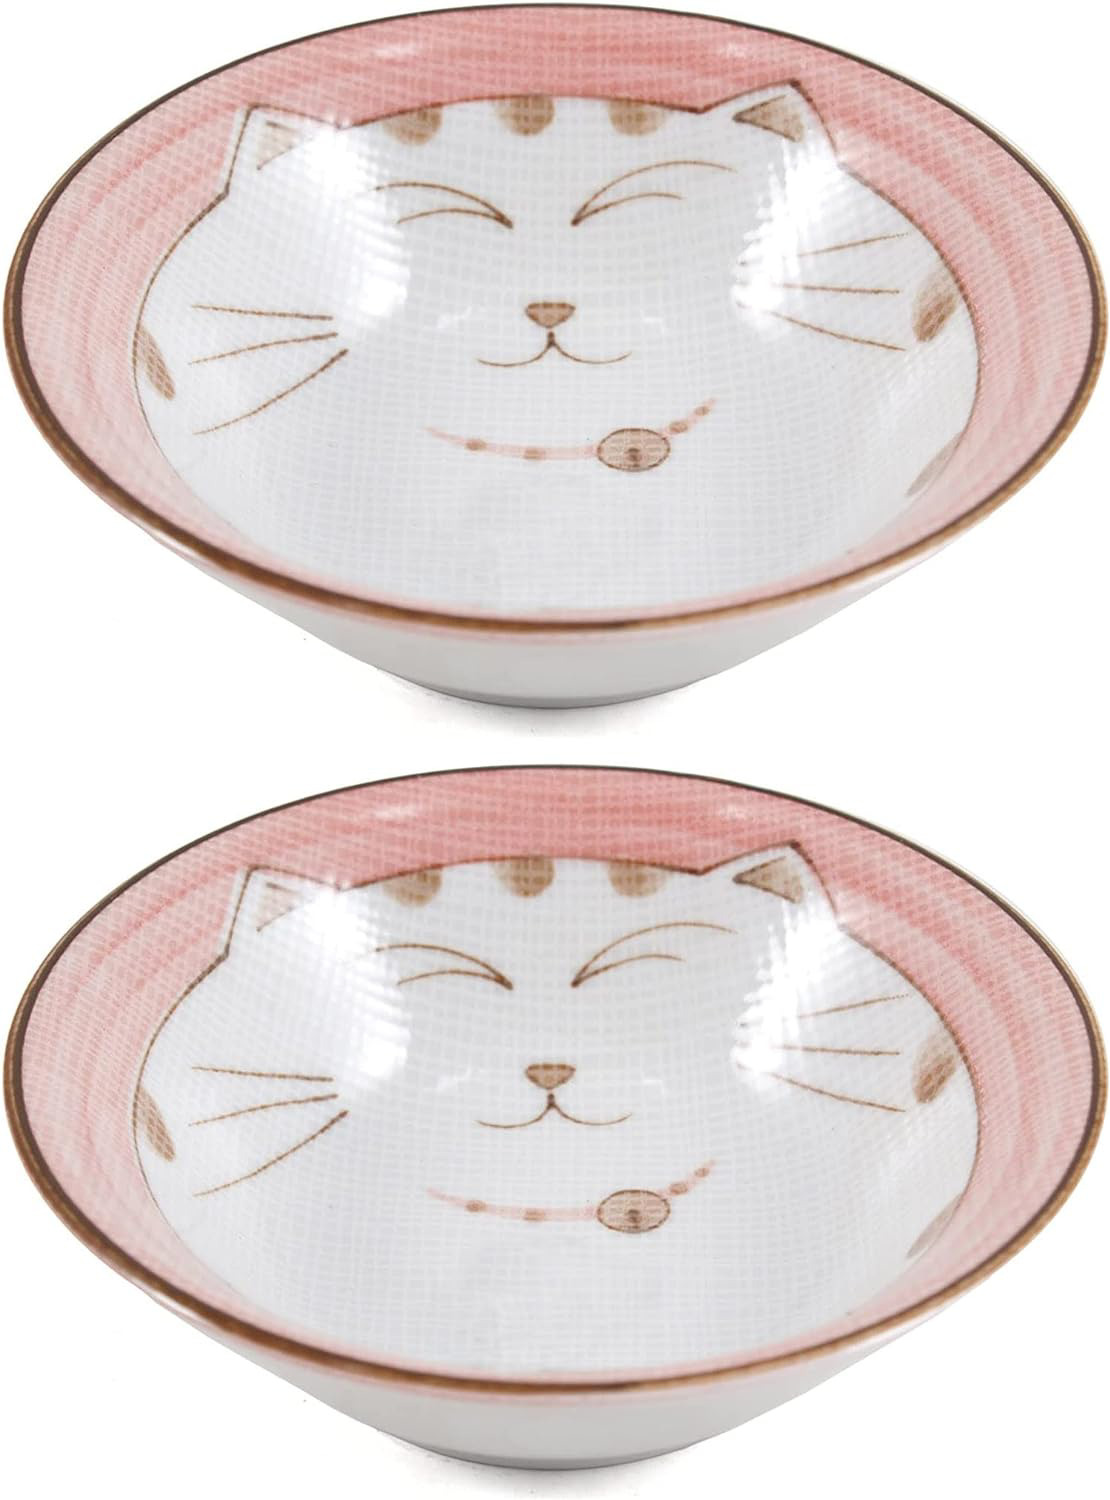 JapanBargain, Japanese Porcelain Bowl Rice Bowl Soup Bowl Made in Japan, Maneki